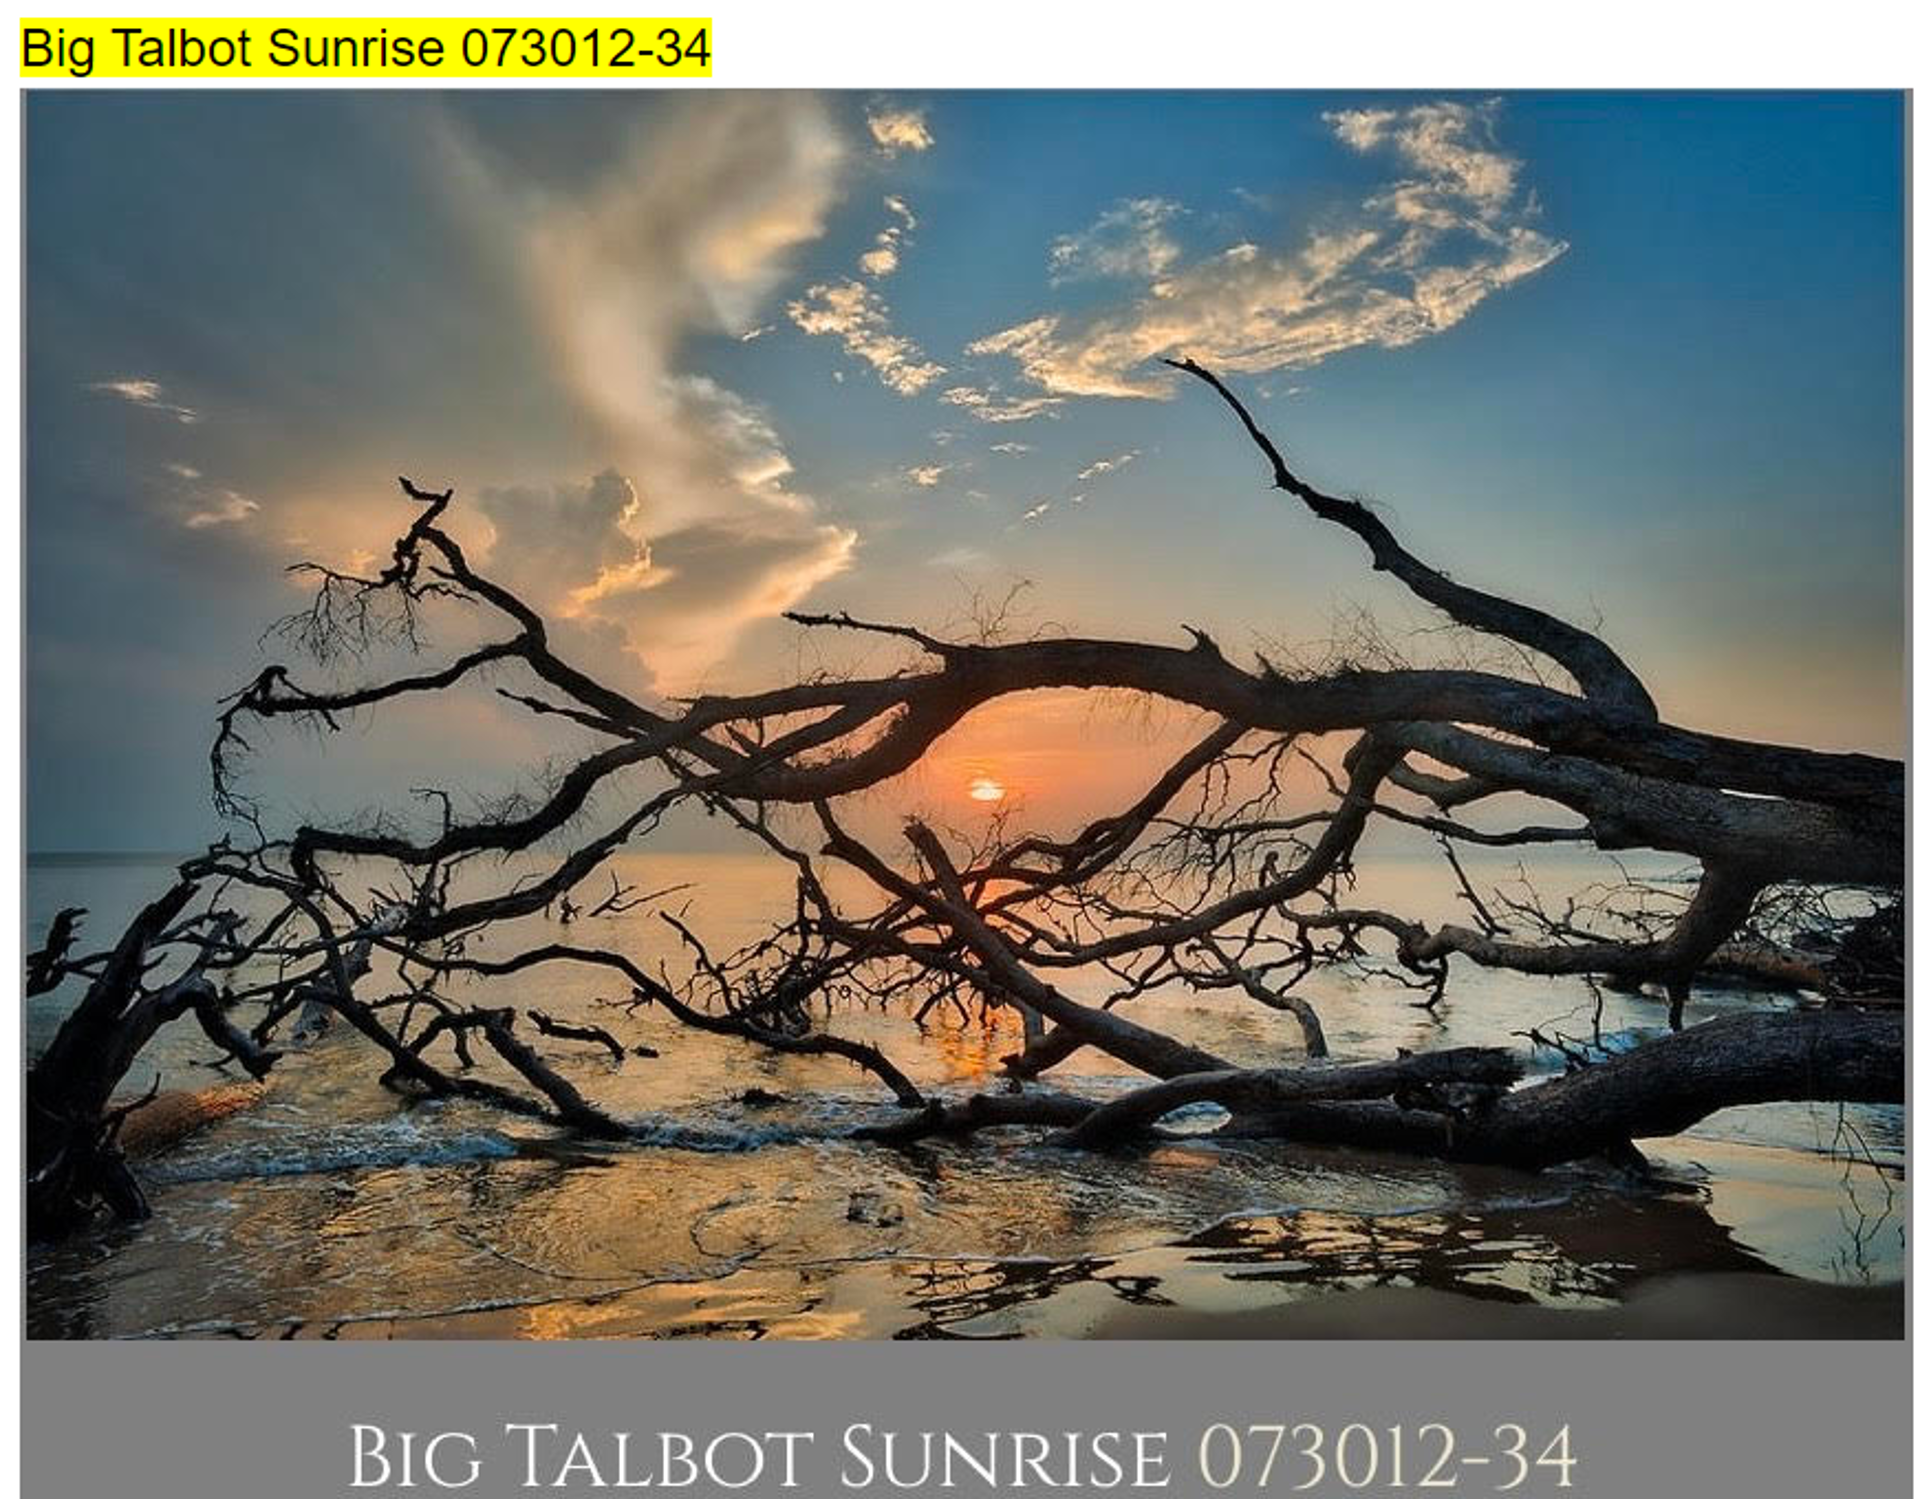 Big Talbot Sunrise framed by Will Dickey